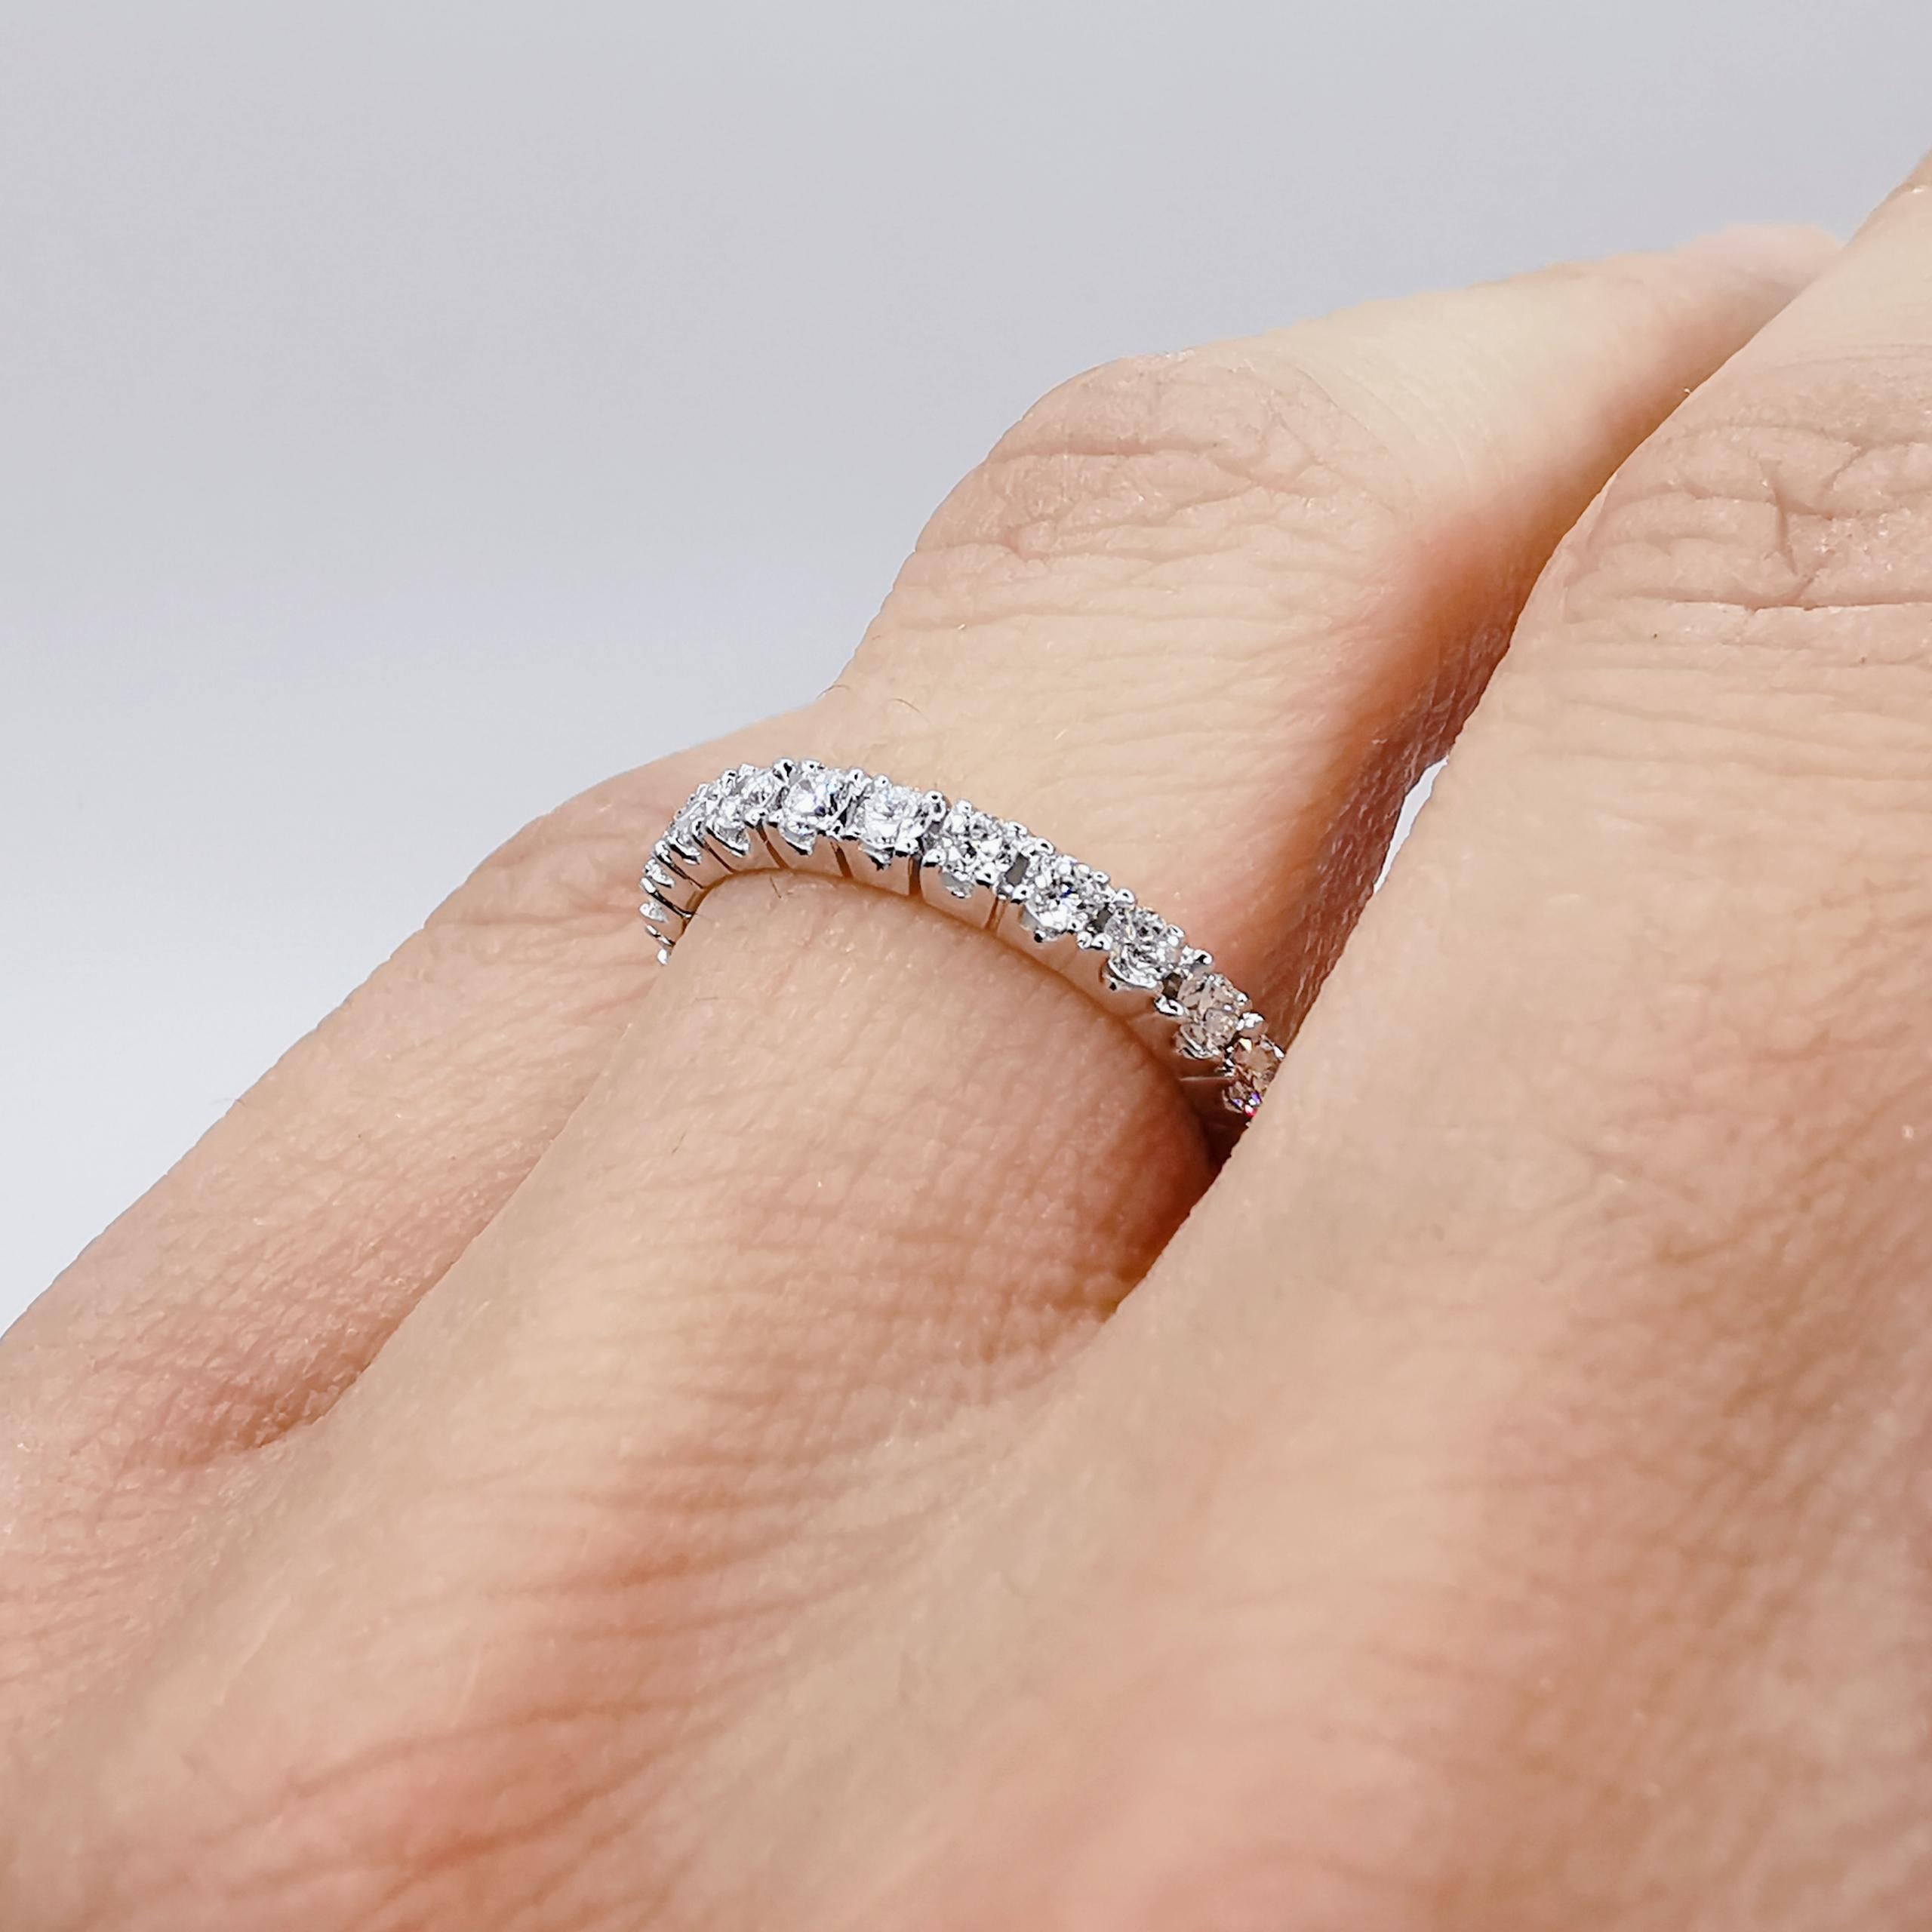 For Sale:  18K White Gold Diamond Pavé Eternity Band Wedding Ring 5